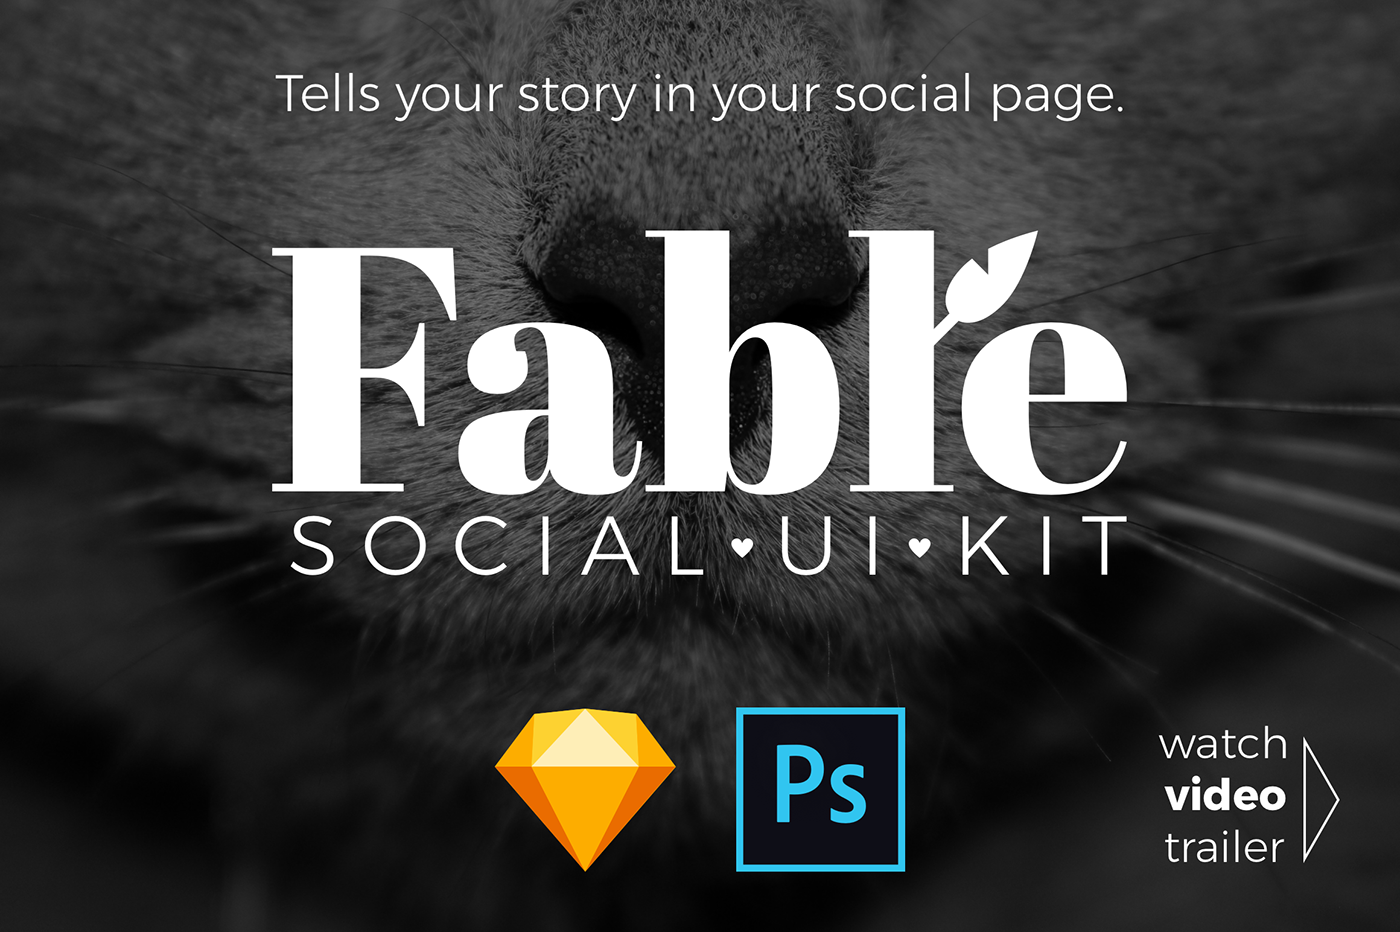 facebook twitter instagram Pinterest sketch photoshop social kit Pack template